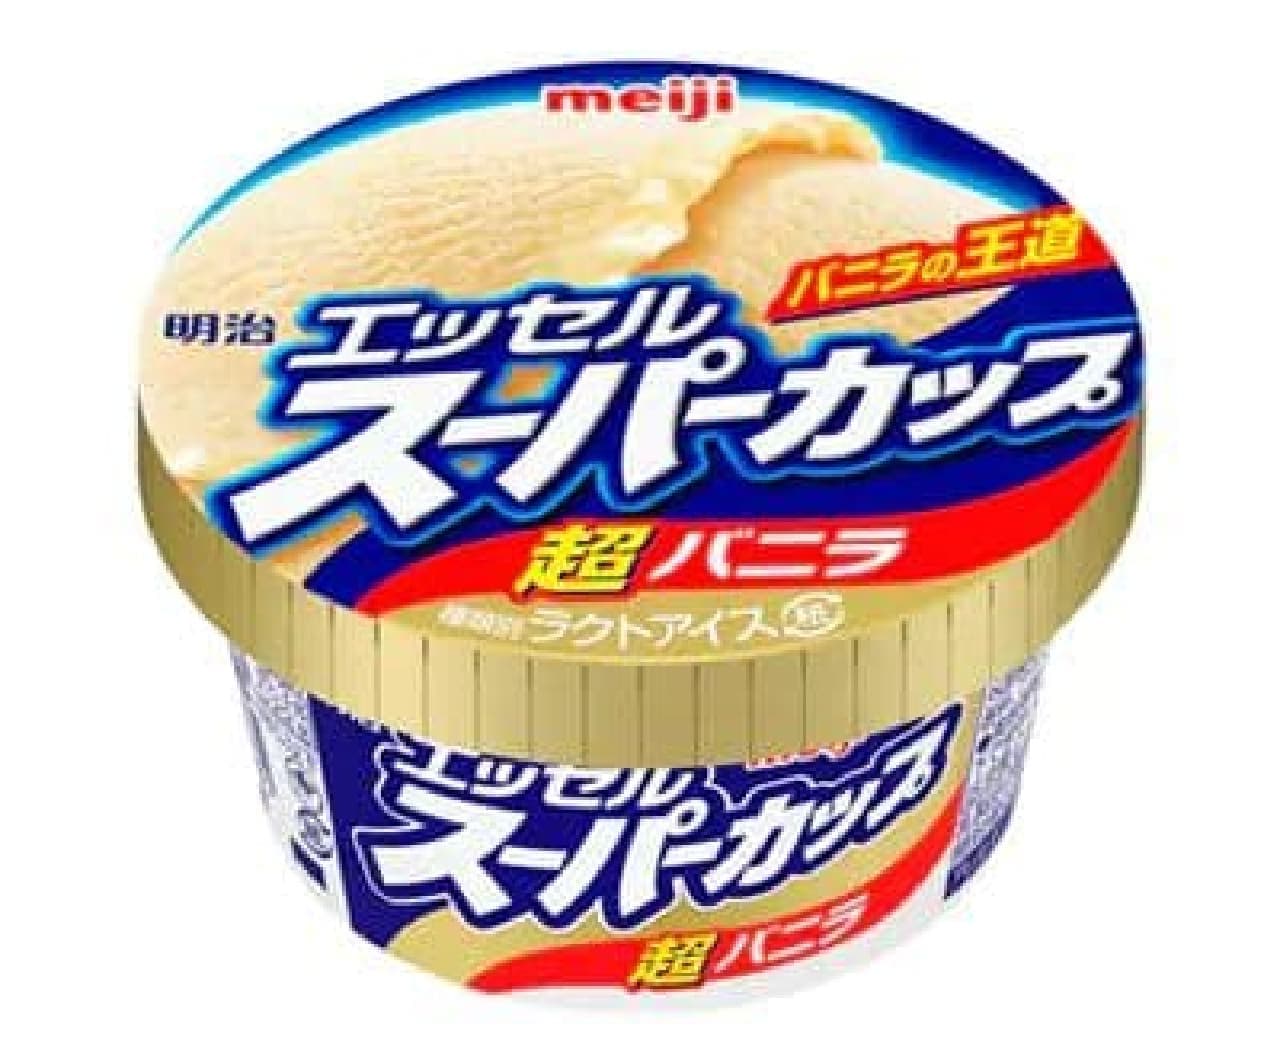 Meiji Essence Super Cup Super Vanilla